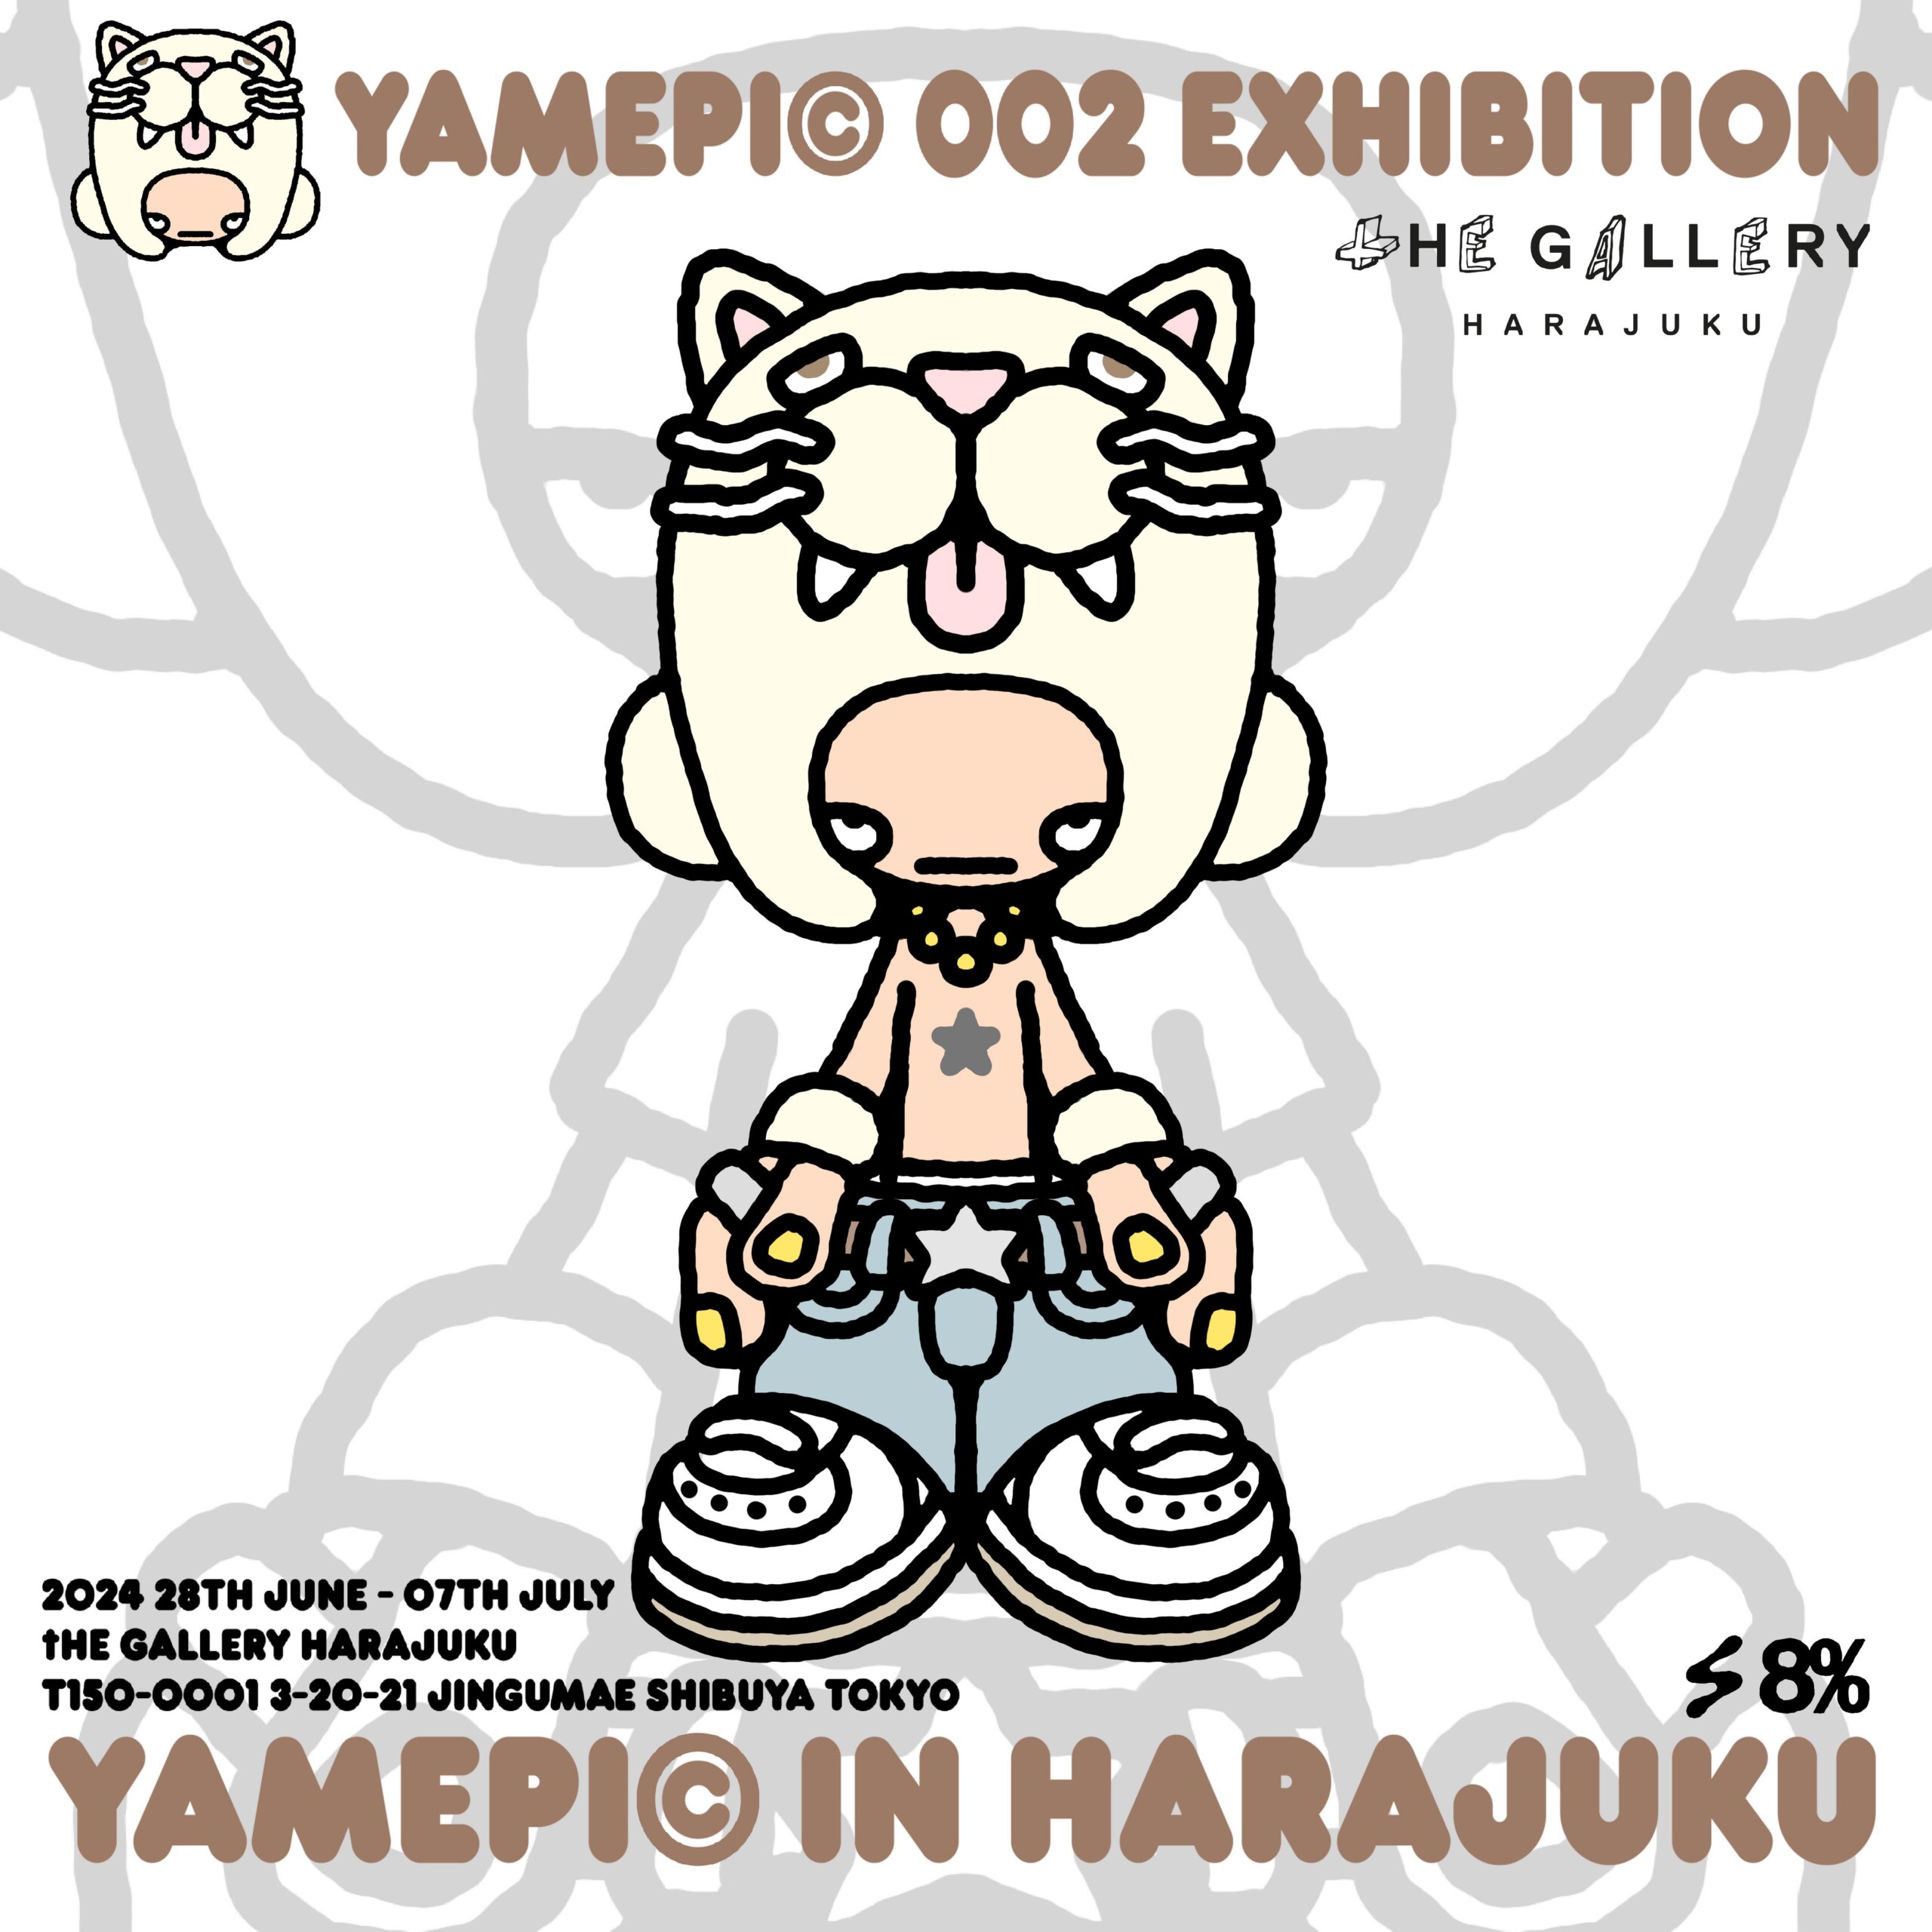 tHE GALLERY HARAJUKUにて、6月28日(金)より、YAMEPI©展覧会「002」を開催。